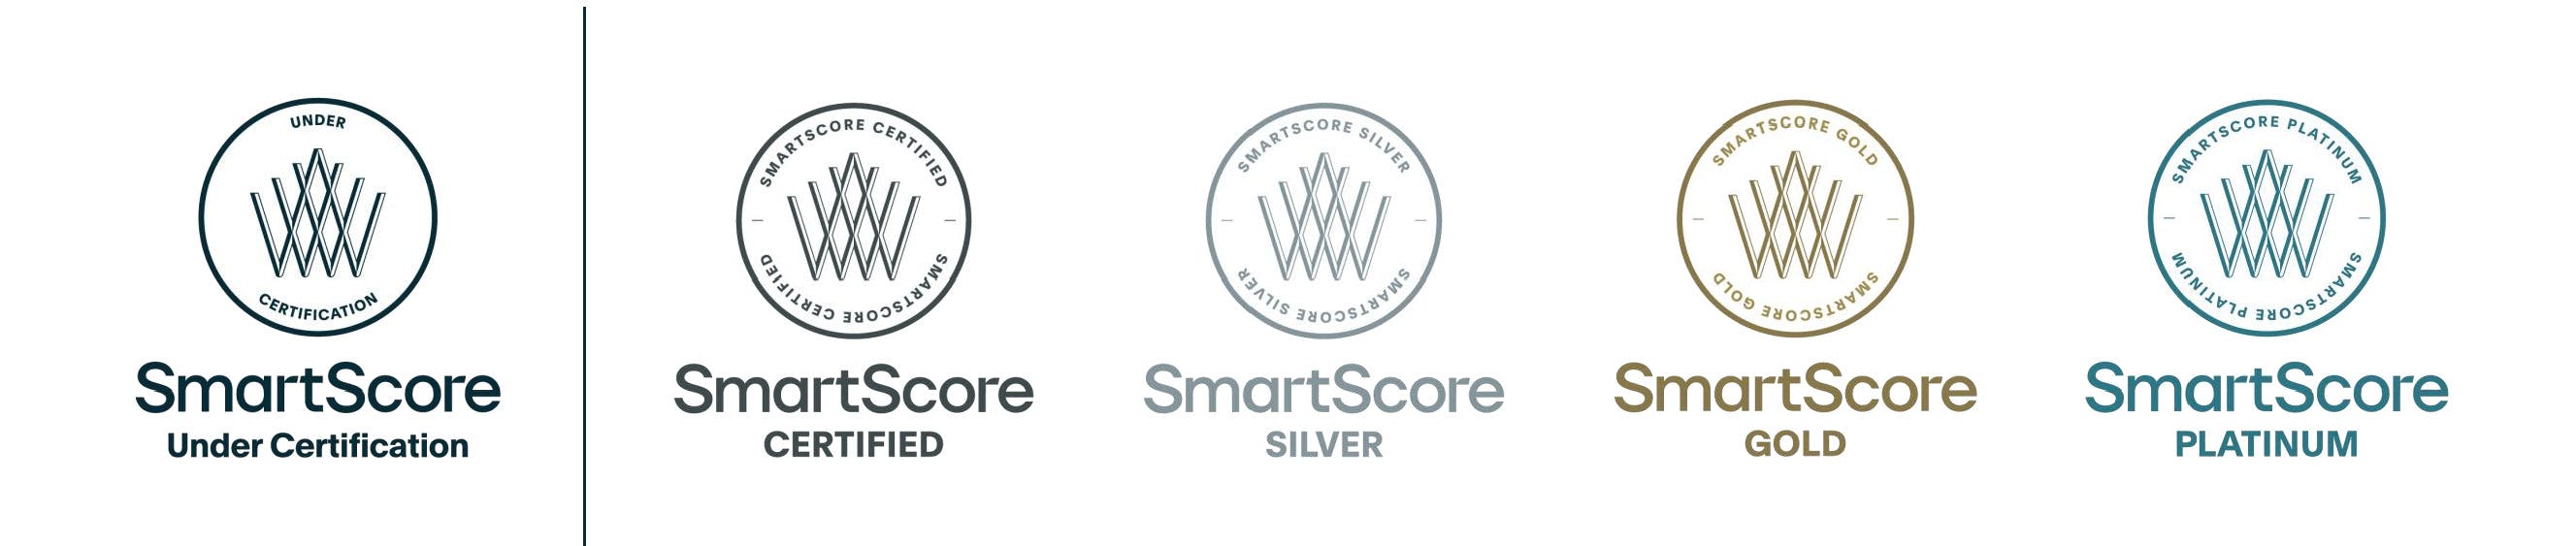 smart score certifications 